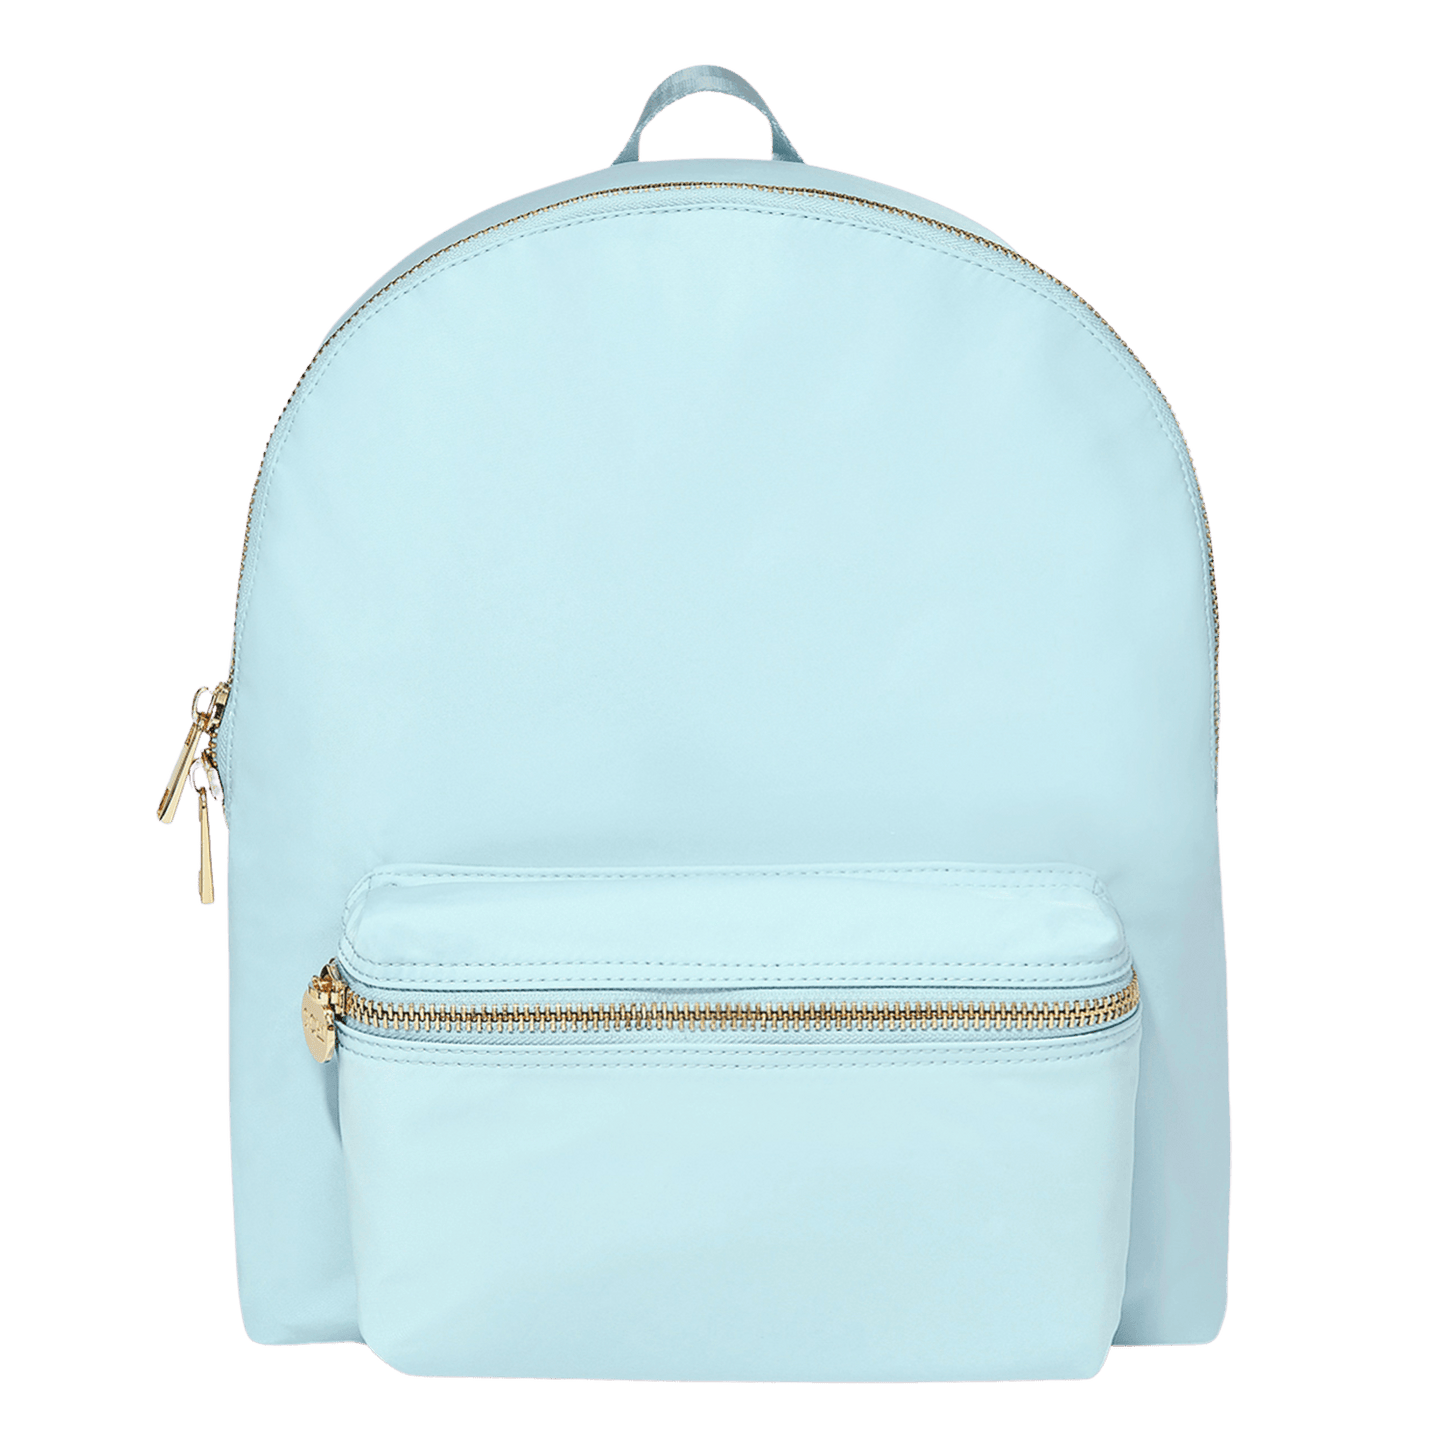 POPPY Fashion Mini Backpack Purse for Women Girls India